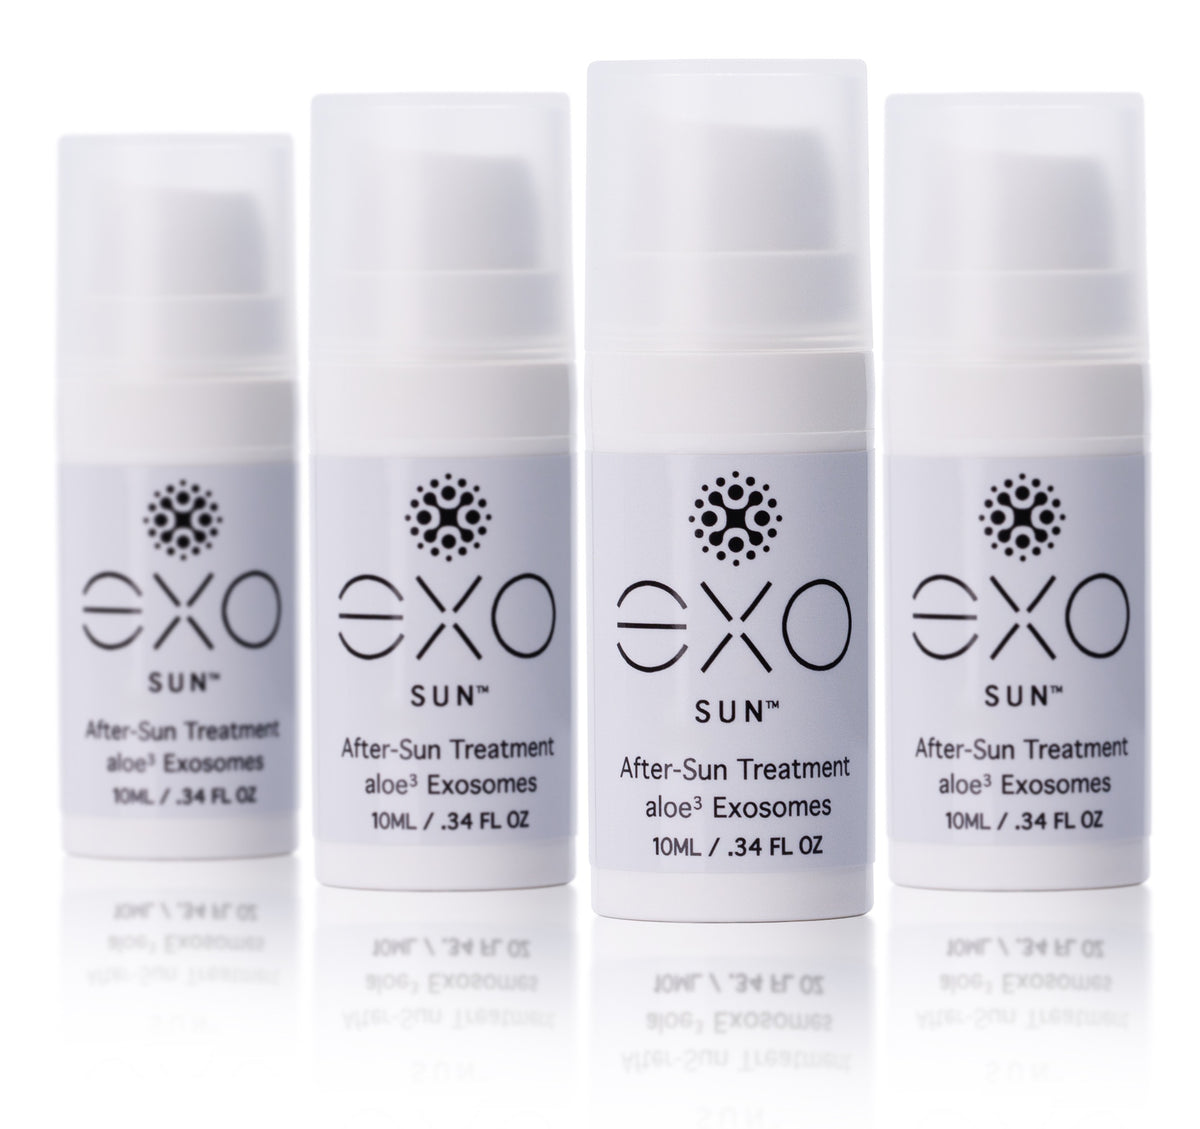 EXO SUN™ - After-Sun Treatment - Travel Size, 4 bottles - 10ML / .34 fl oz  (x4)